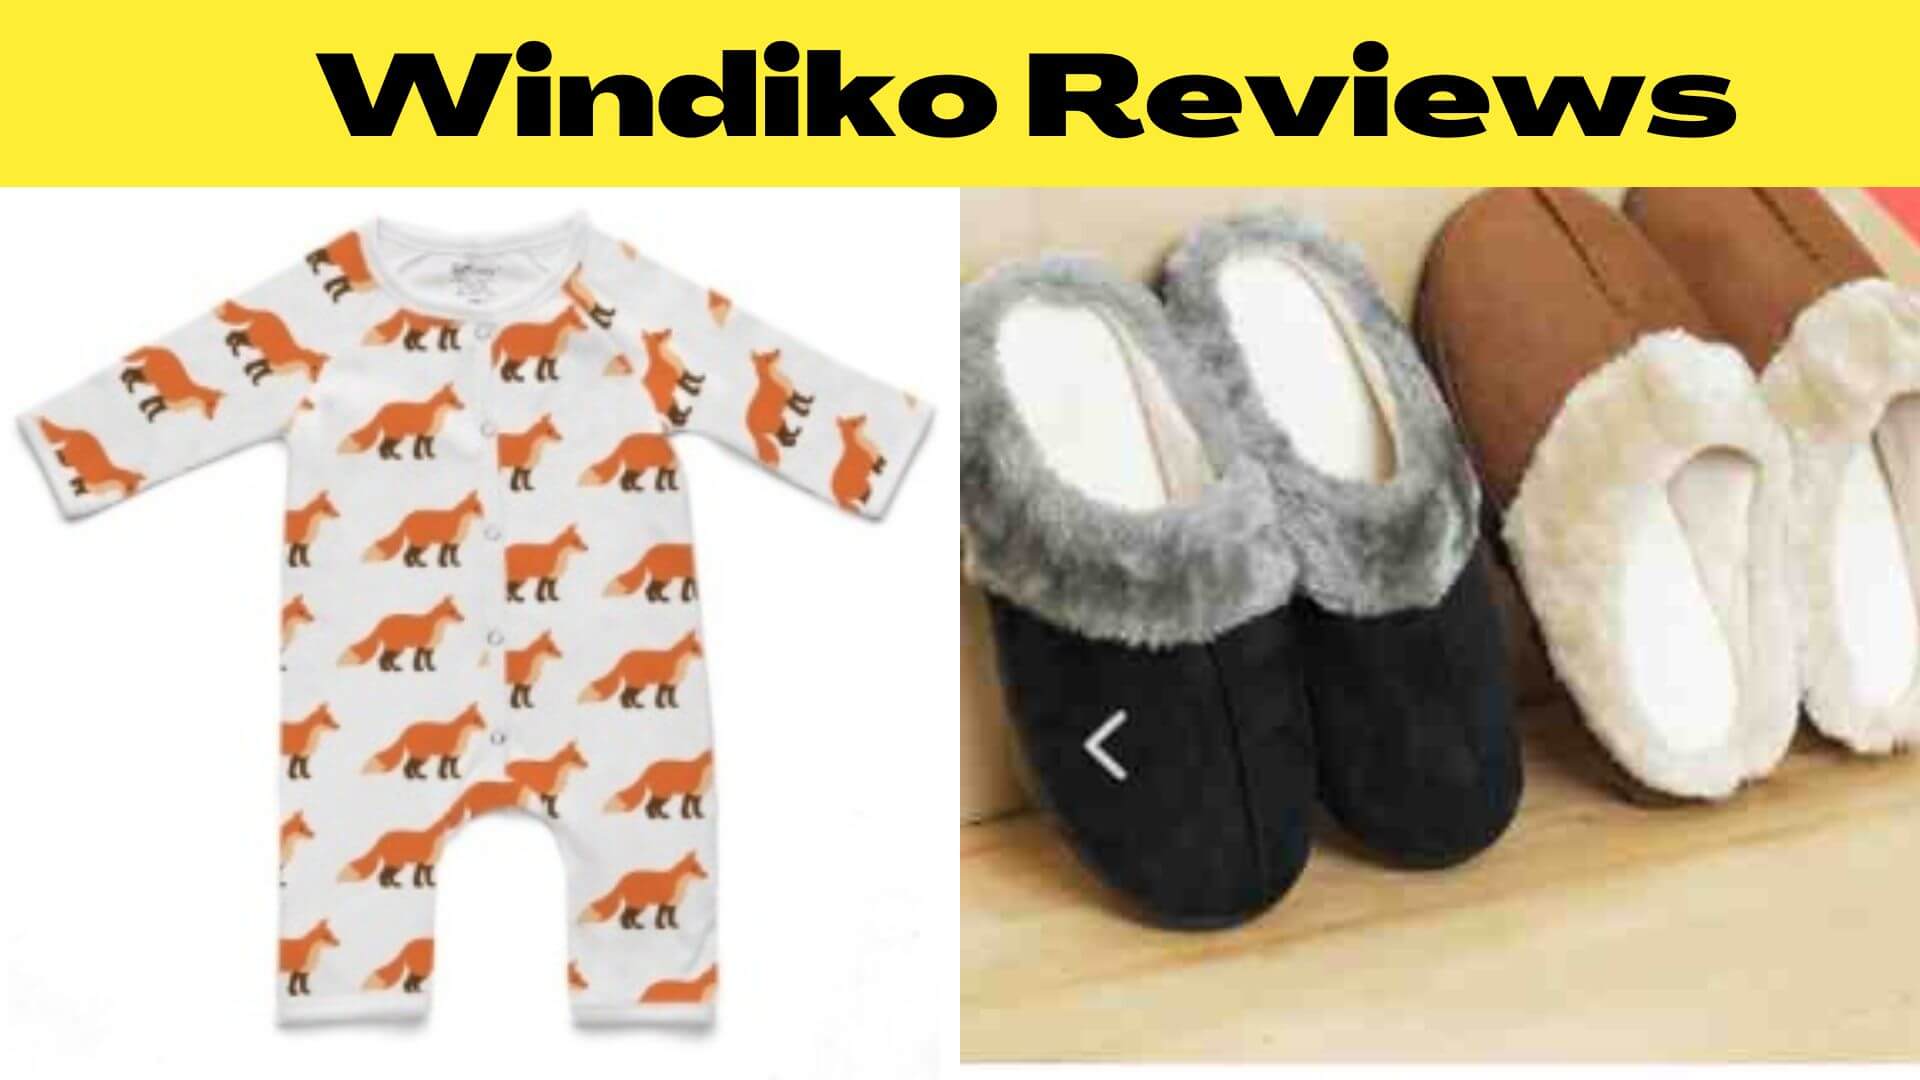 Windiko Reviews